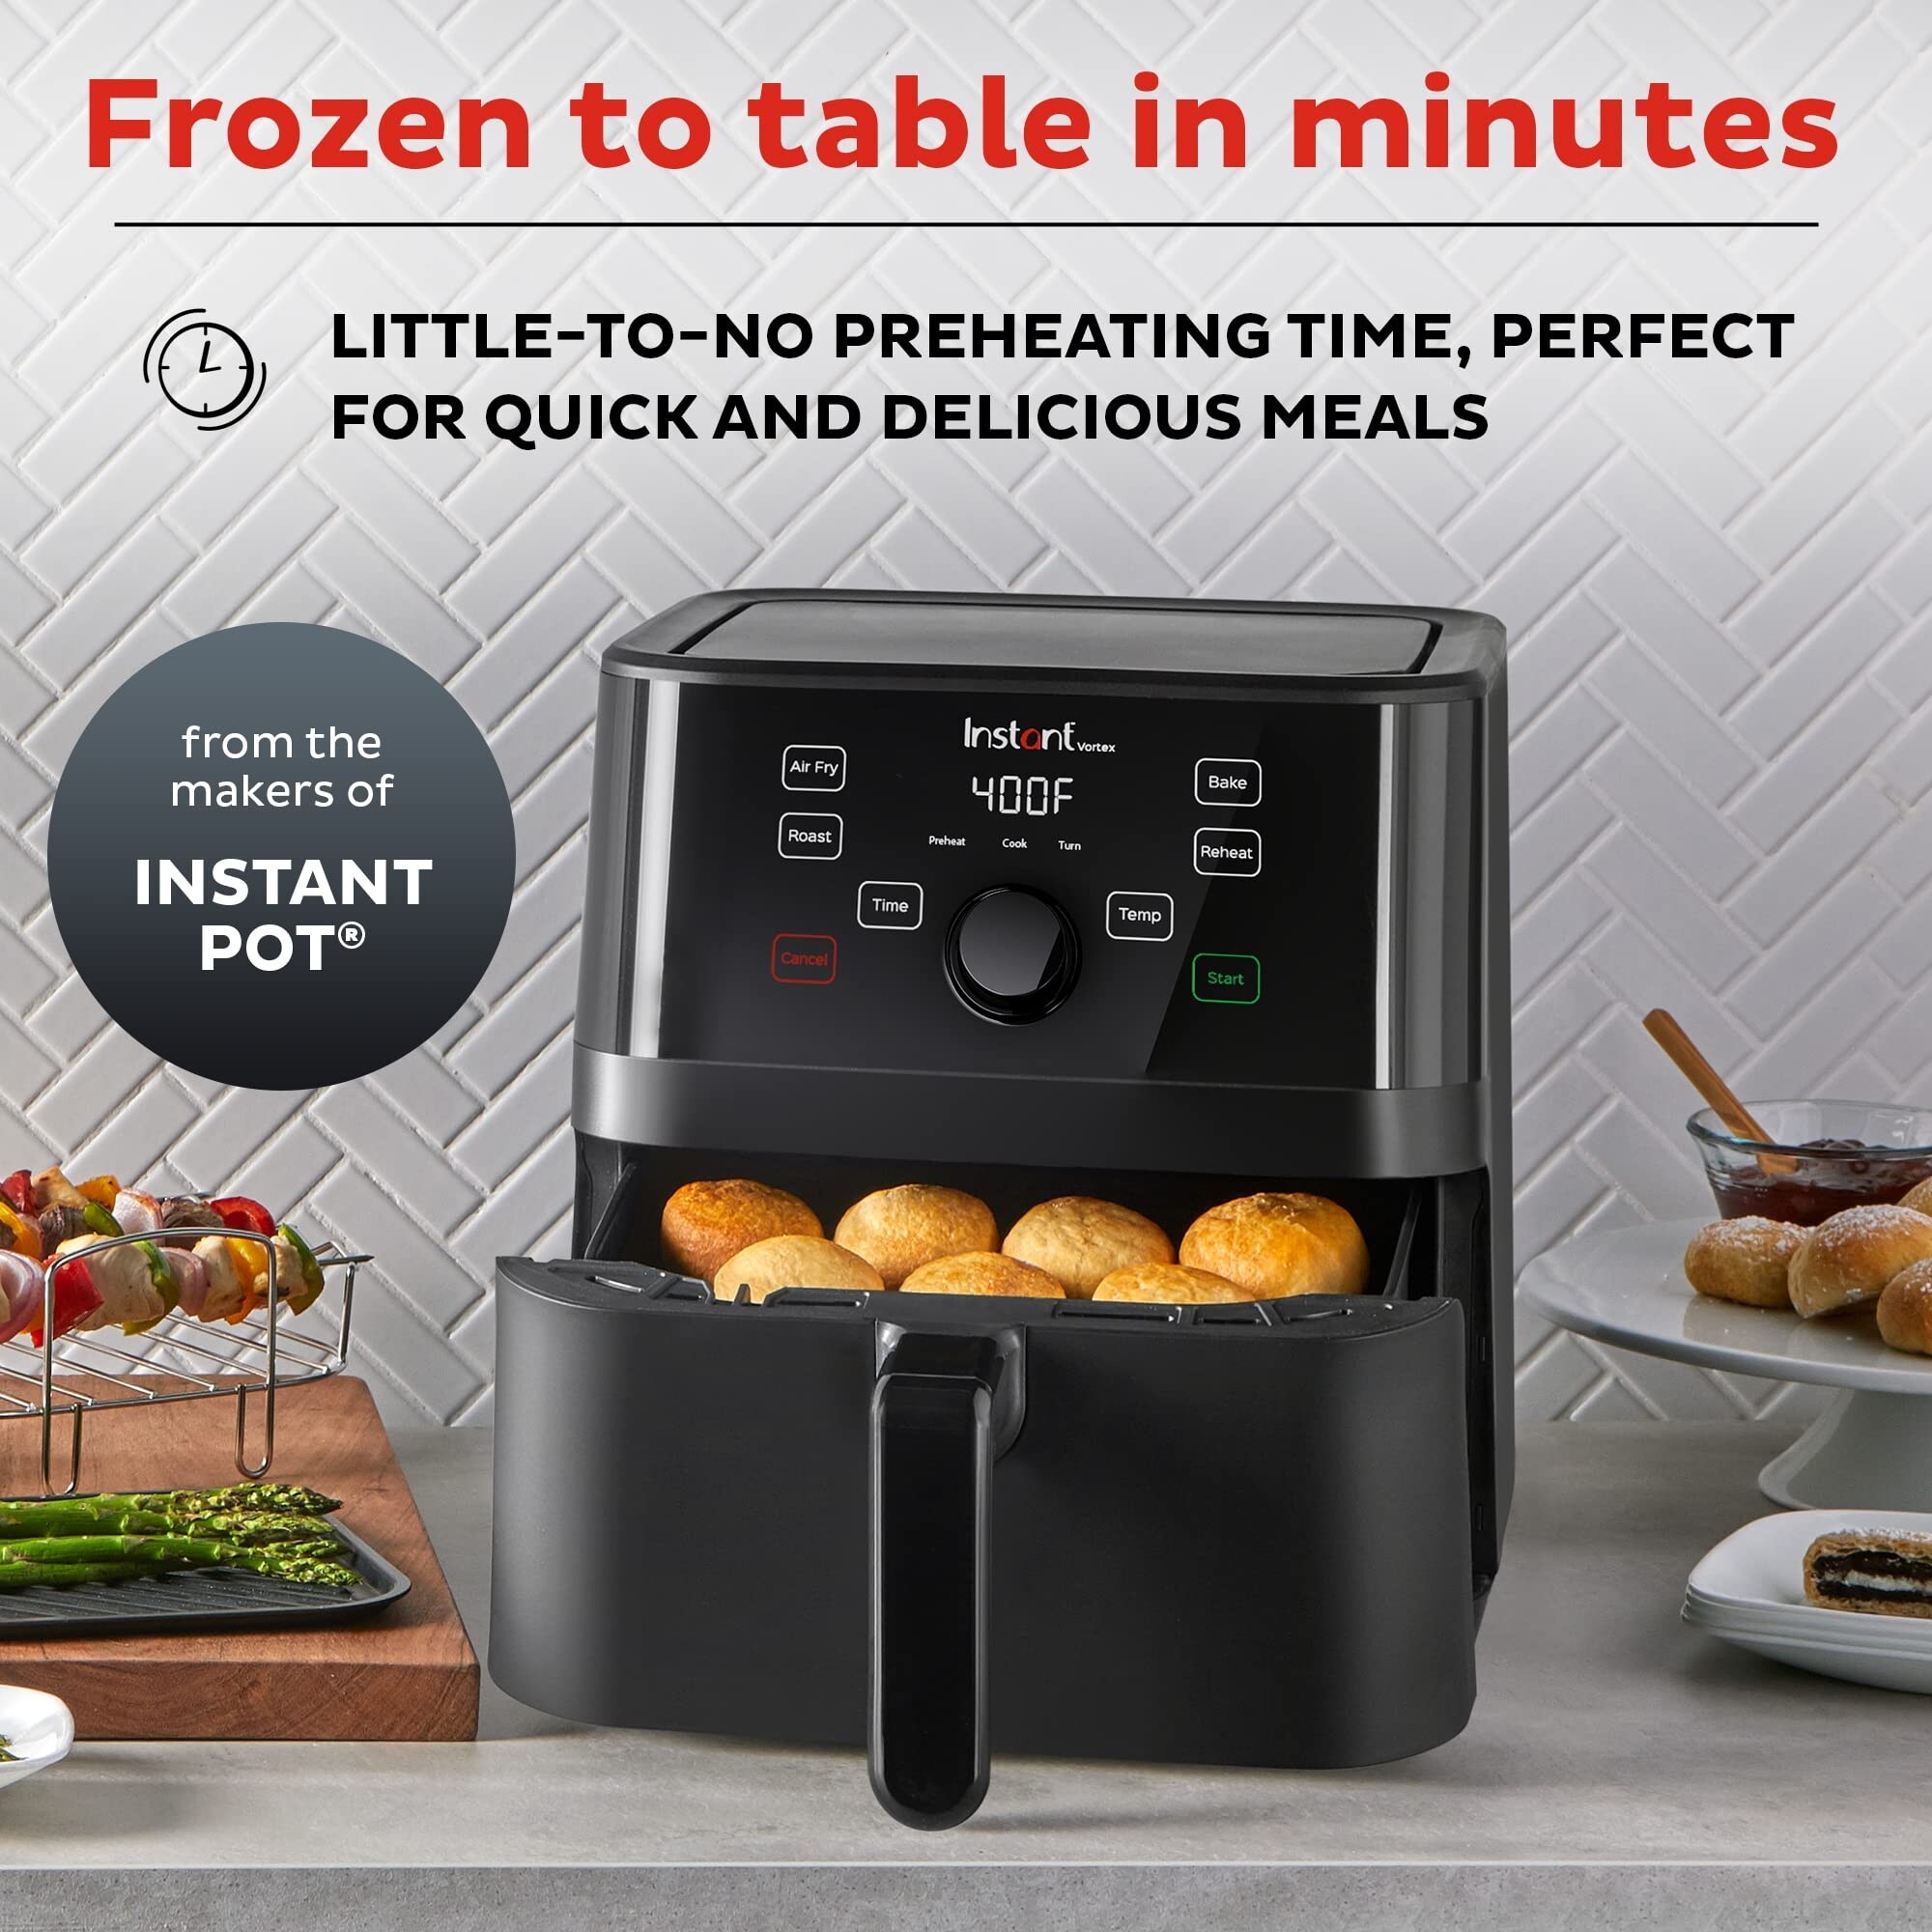 8.5qt Air Fryer Oven Combo, Customizable Smart Cooking Programs